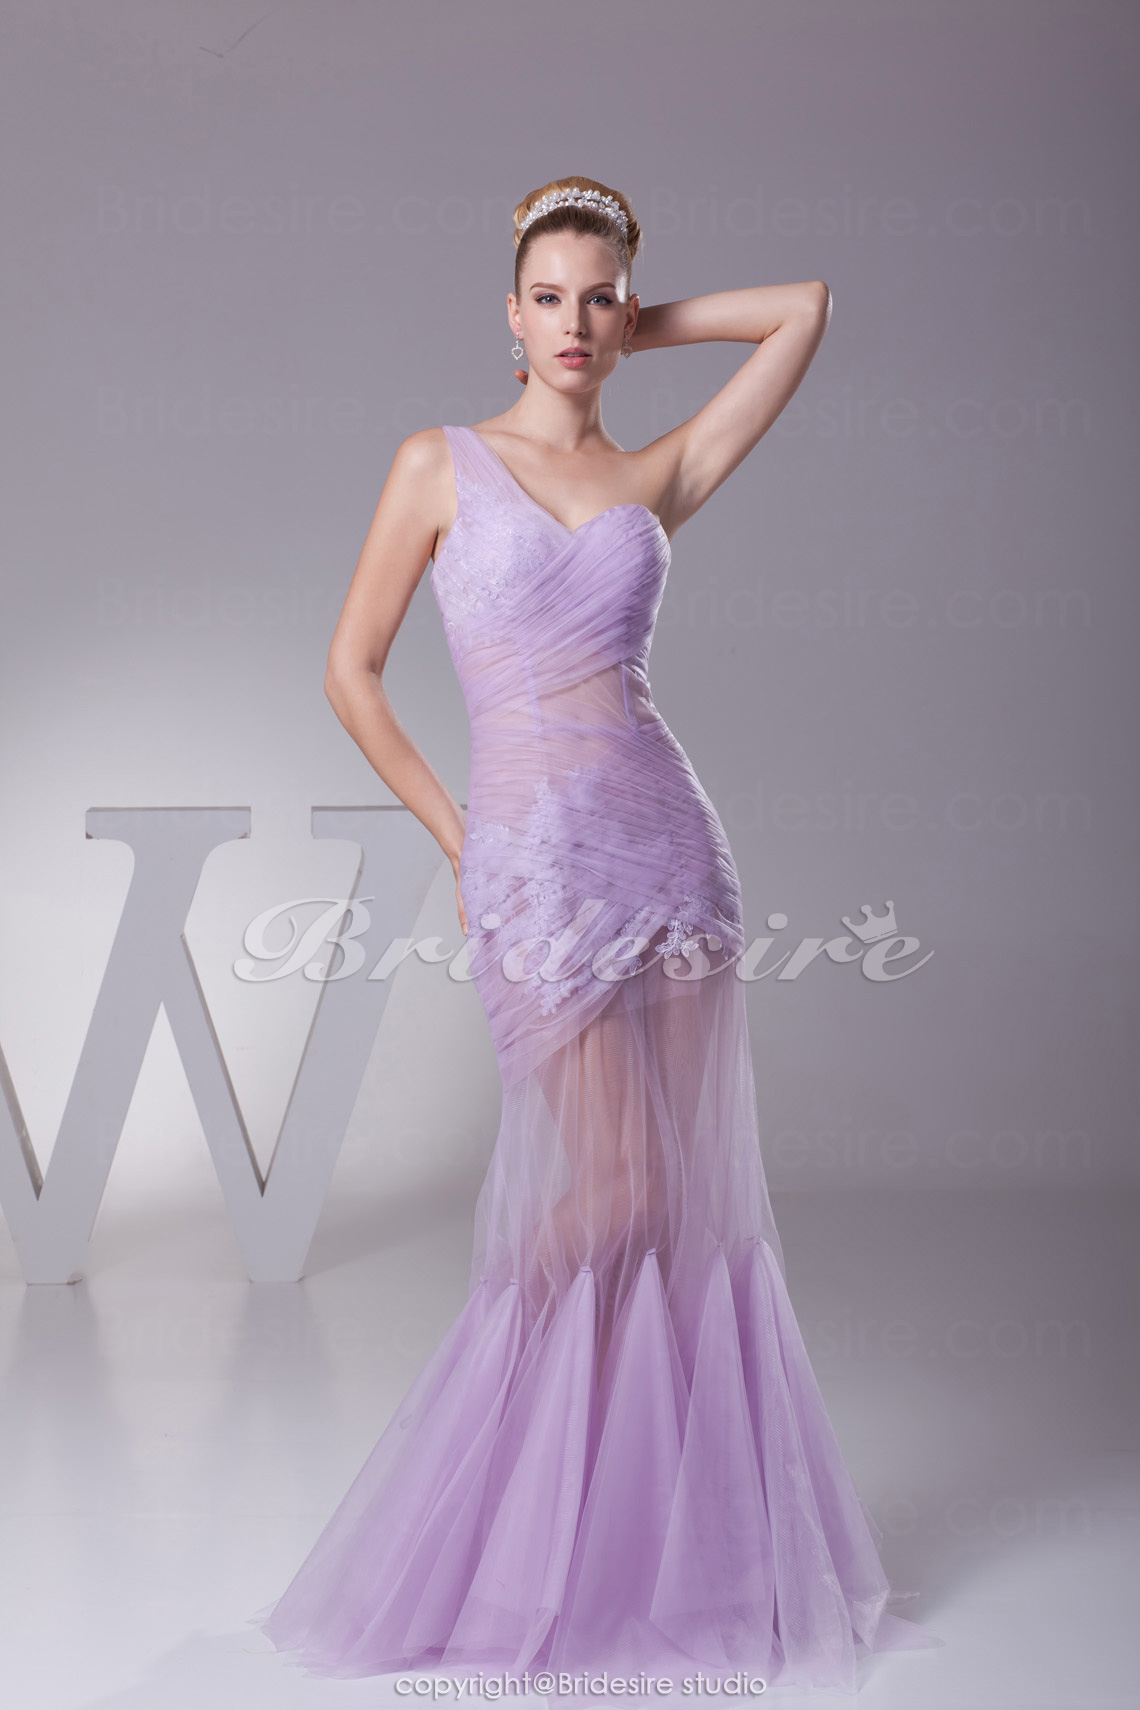 Trumpet/Mermaid One Shoulder Floor-length Sleeveless Organza Dress